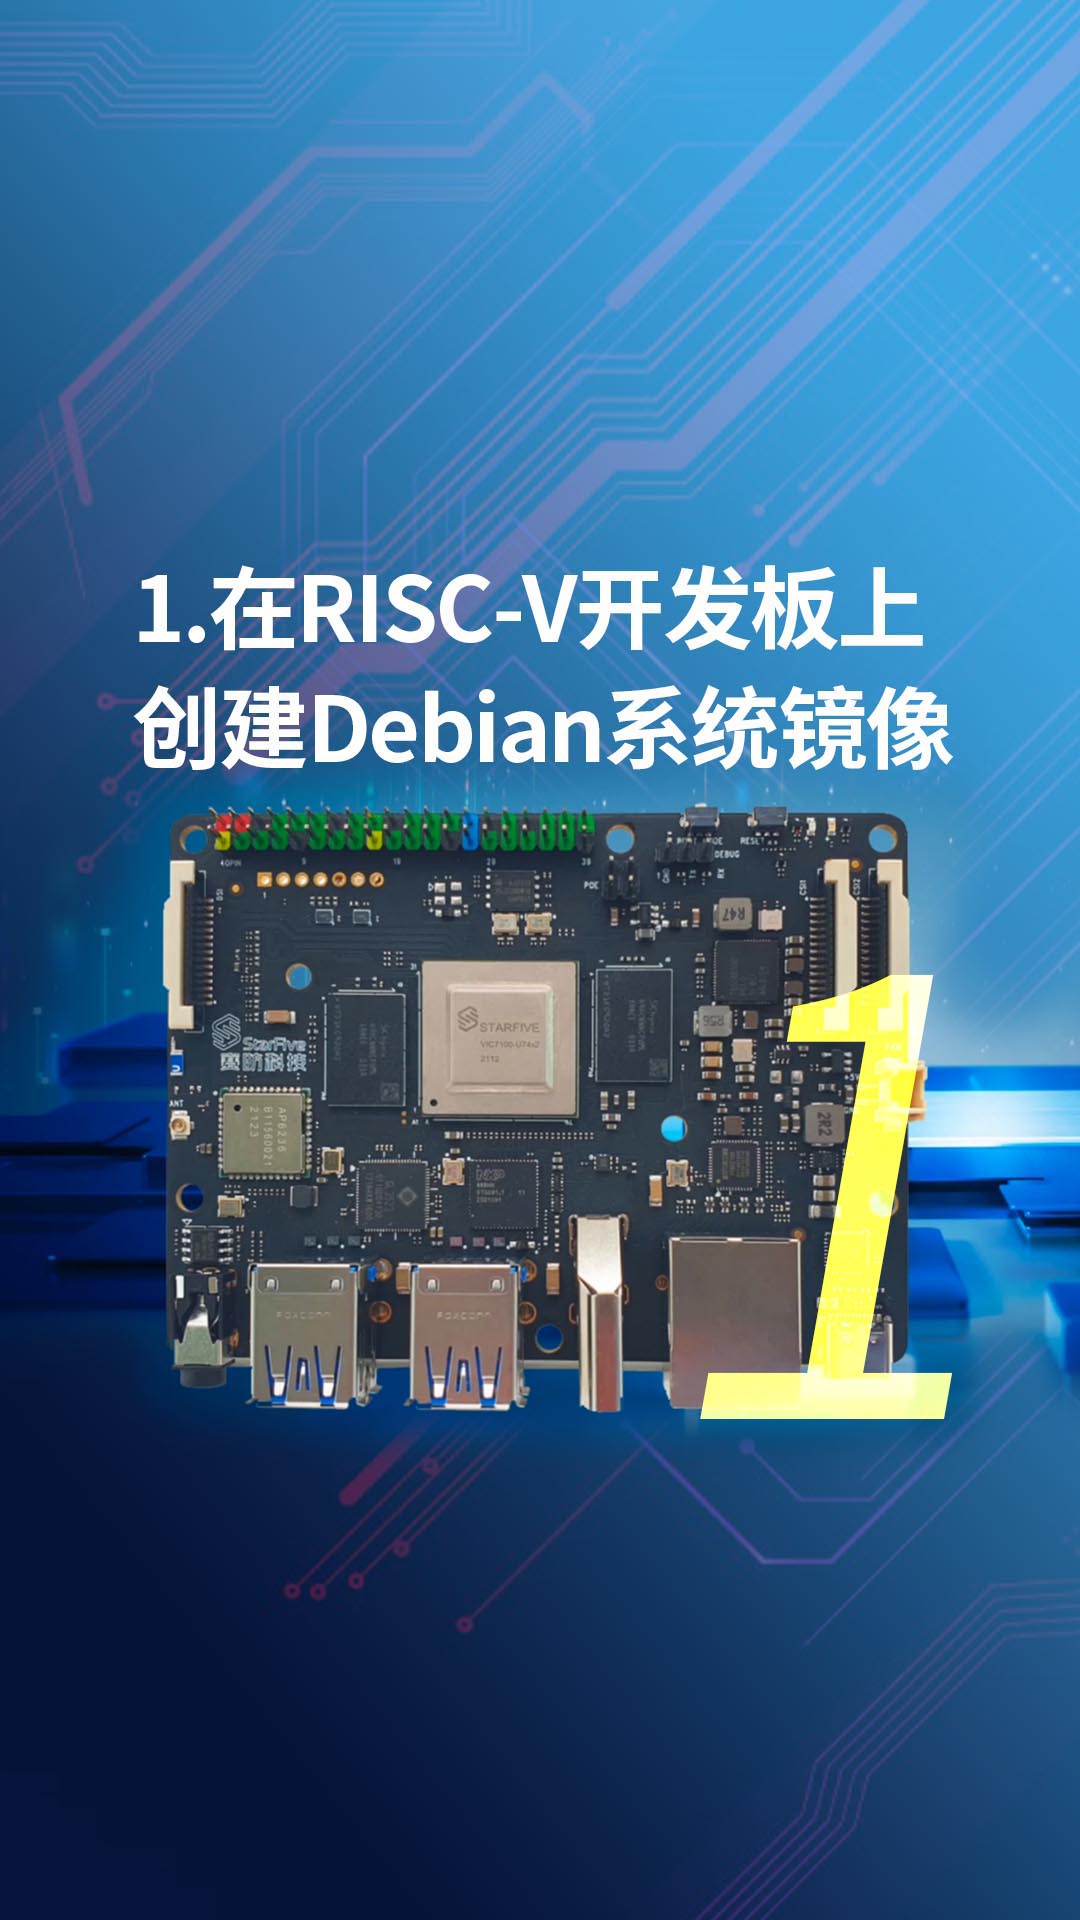 1-在RISC-V开发板上创建Debian系统镜像1.